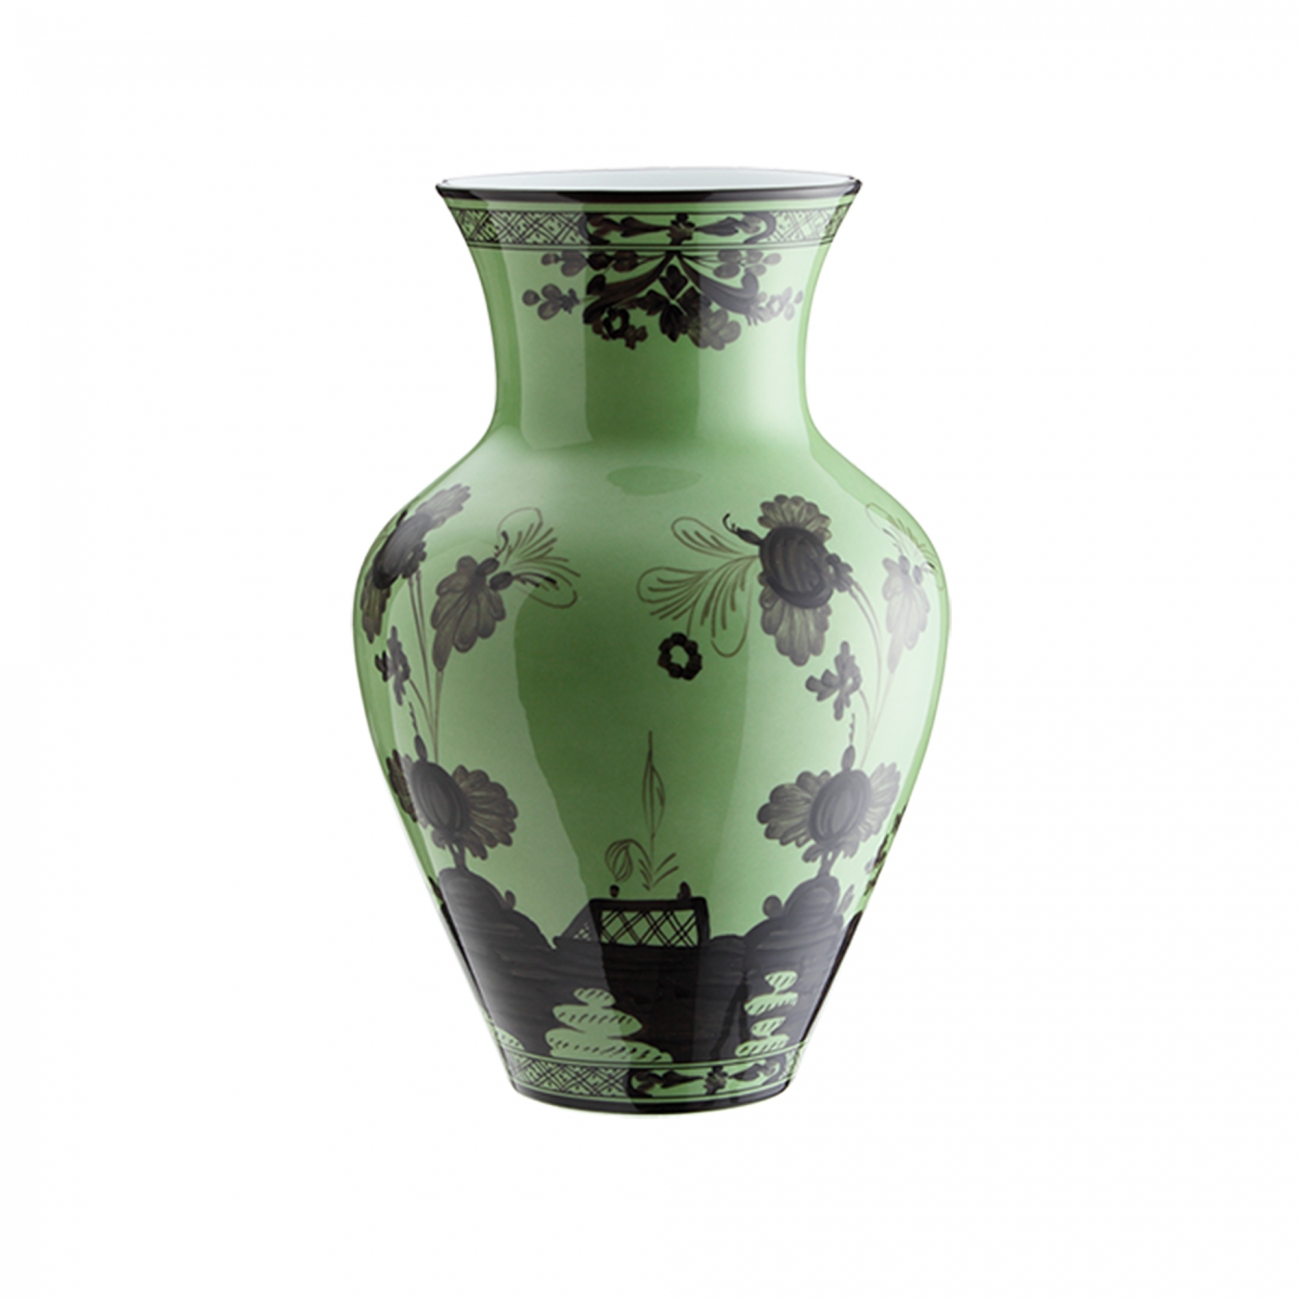 Ginori 1735 Oriente Italiano Ming vase